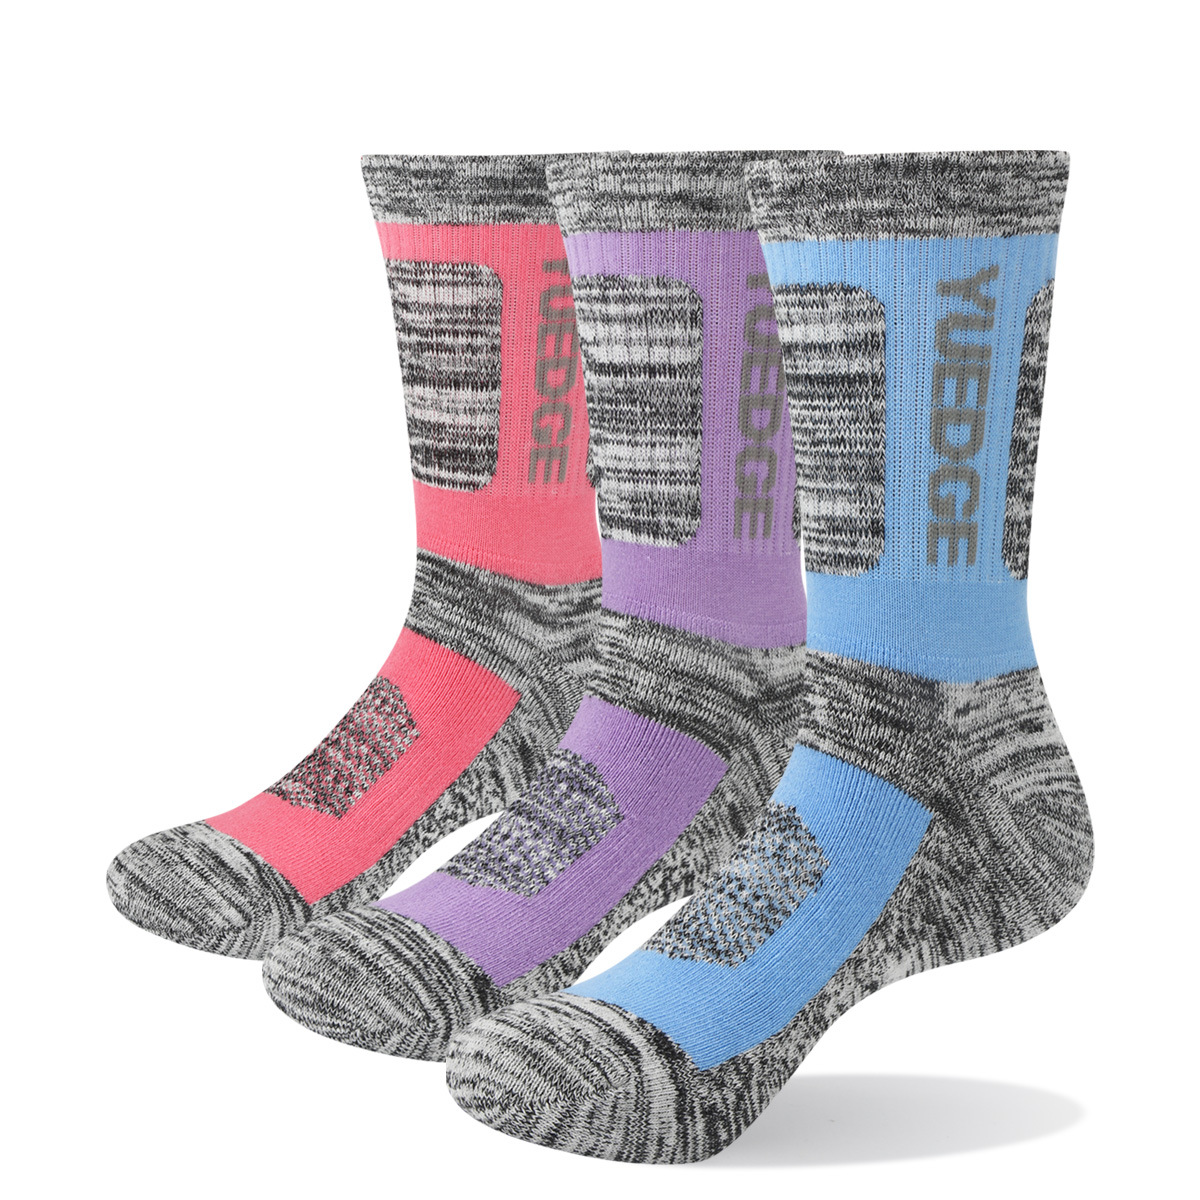 YUEDGE 3 Pairs Outdoor Professional Sports Socks Terry Bottom Hiking Socks Running Socks Basketball Socks